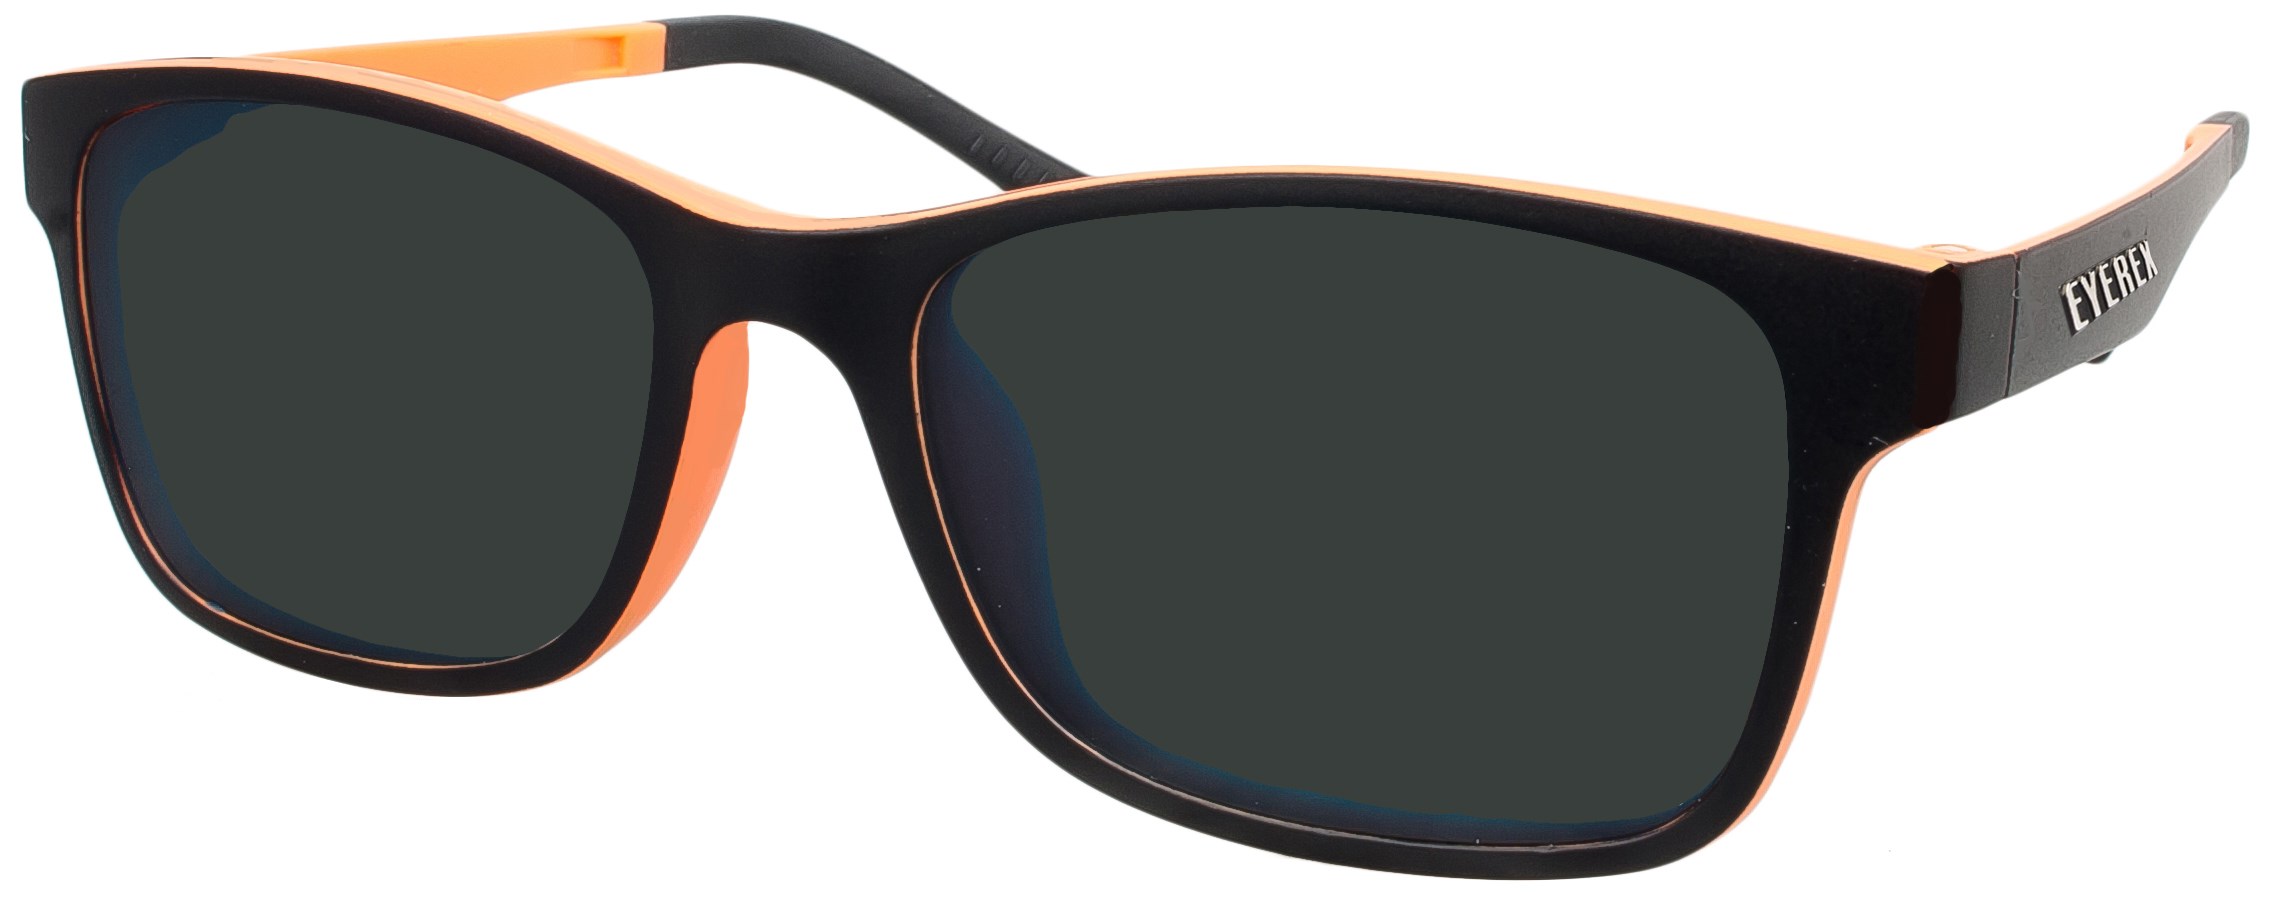 Klipper 8004 schwarz/orange, polarisiert